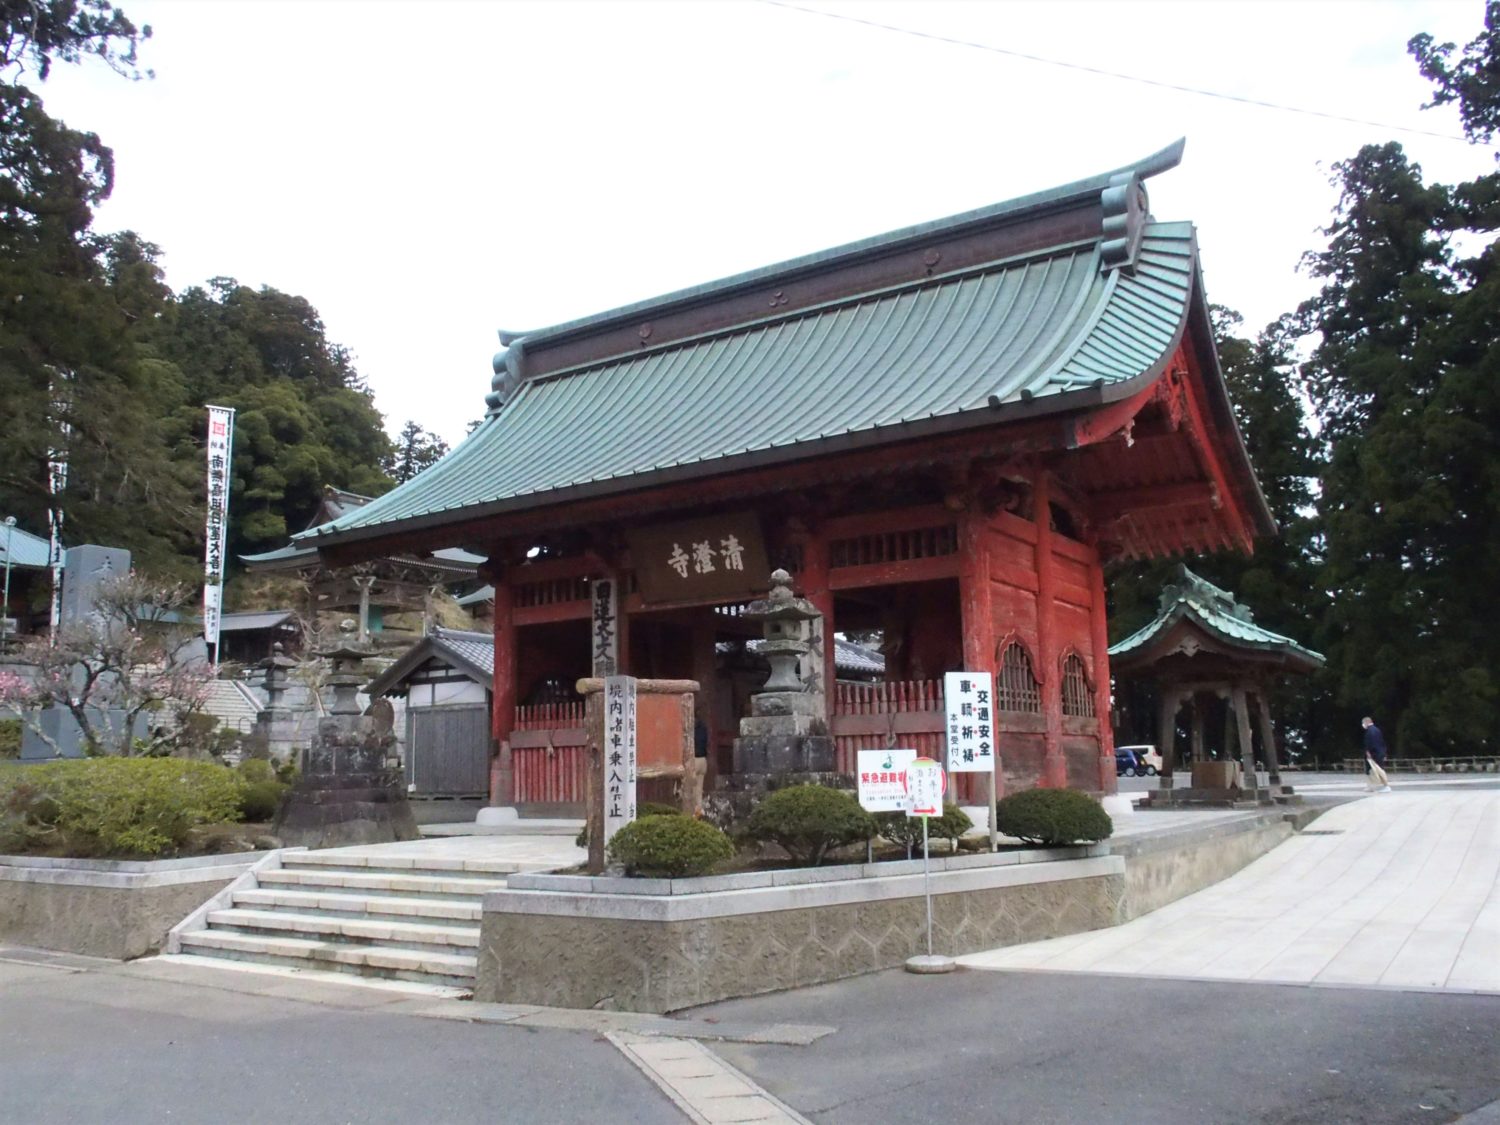 The entrance to Seichoji Temple